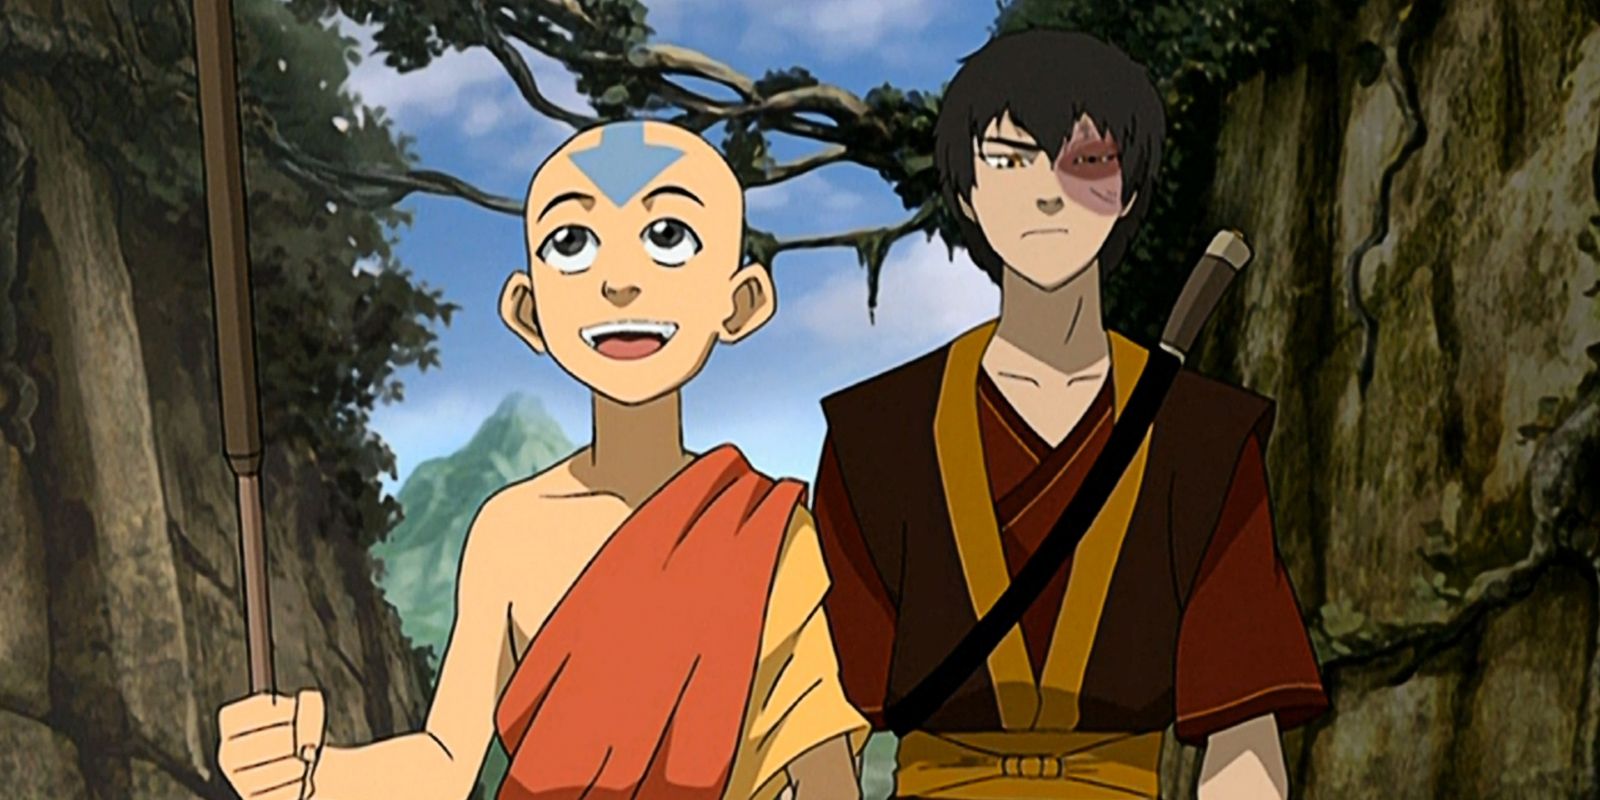 Where to Watch Avatar 2 FullMovie Online Free Google Drive  Bulios